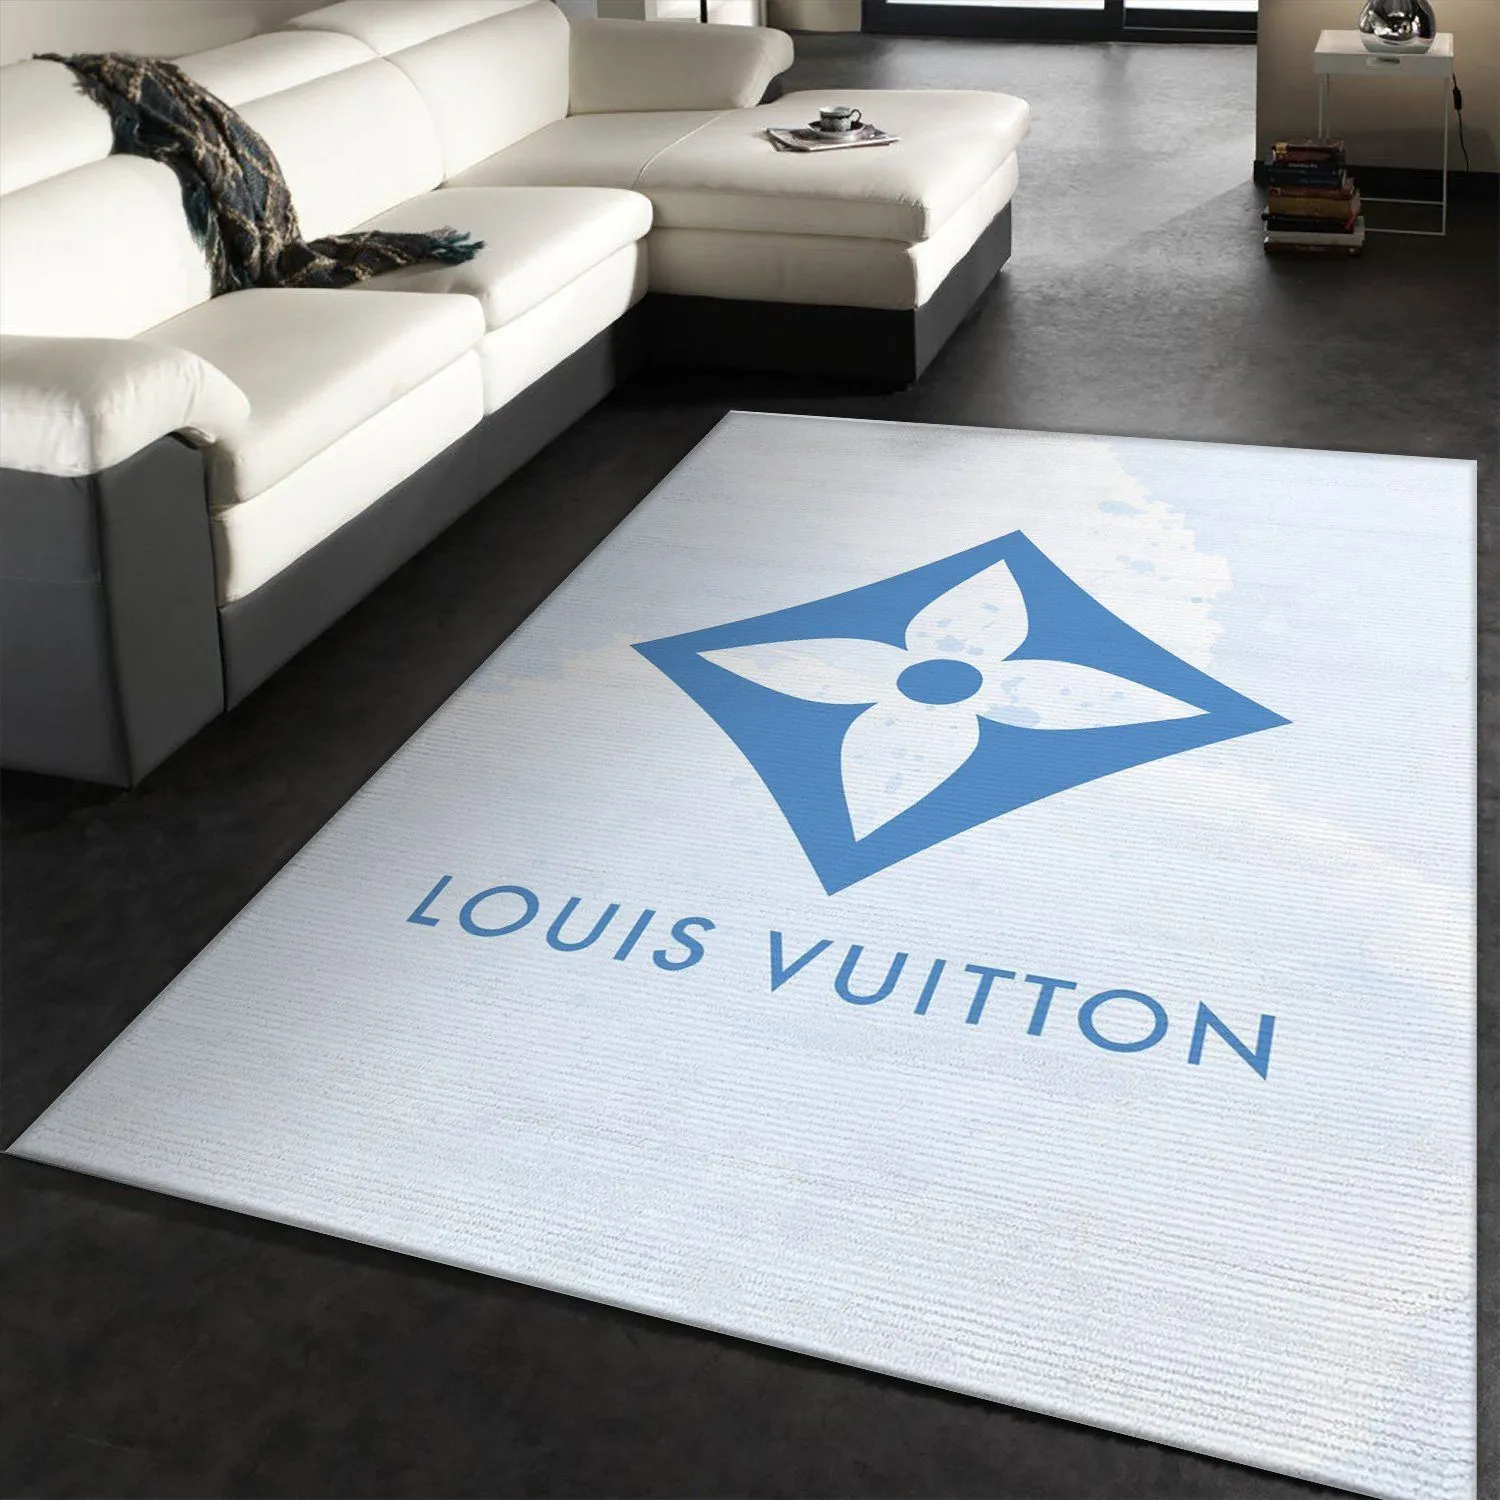 Louis vuitton s Rectangle Rug Area Carpet Door Mat Home Decor Fashion Brand Luxury